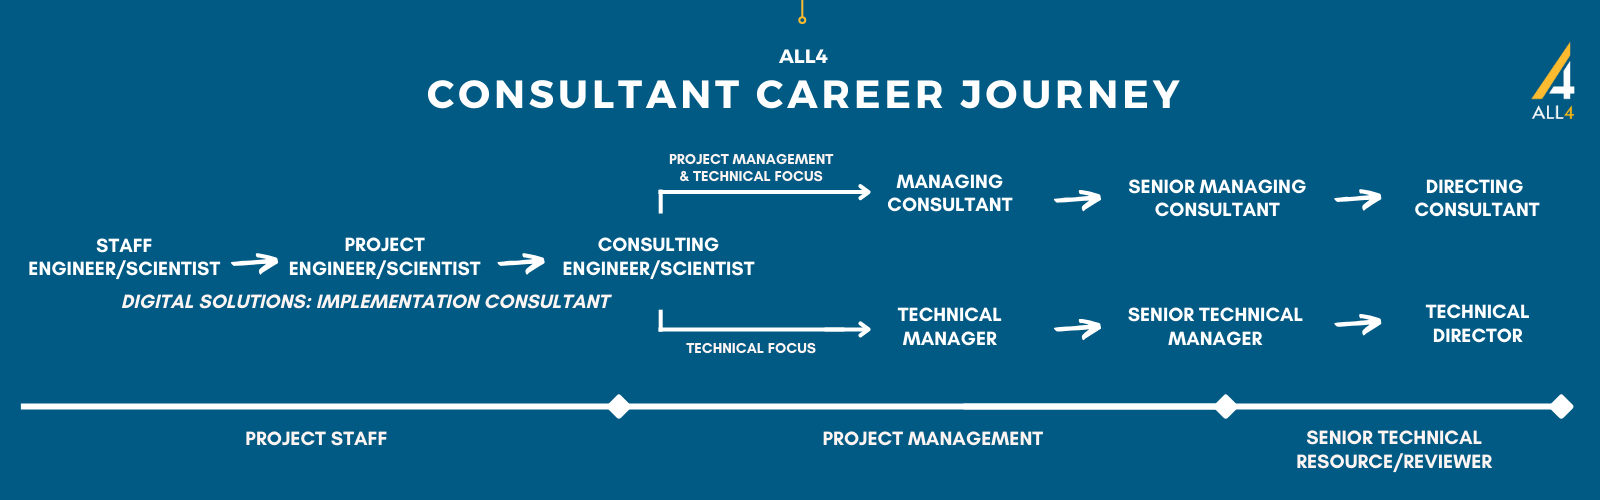 Consultant Career Journey